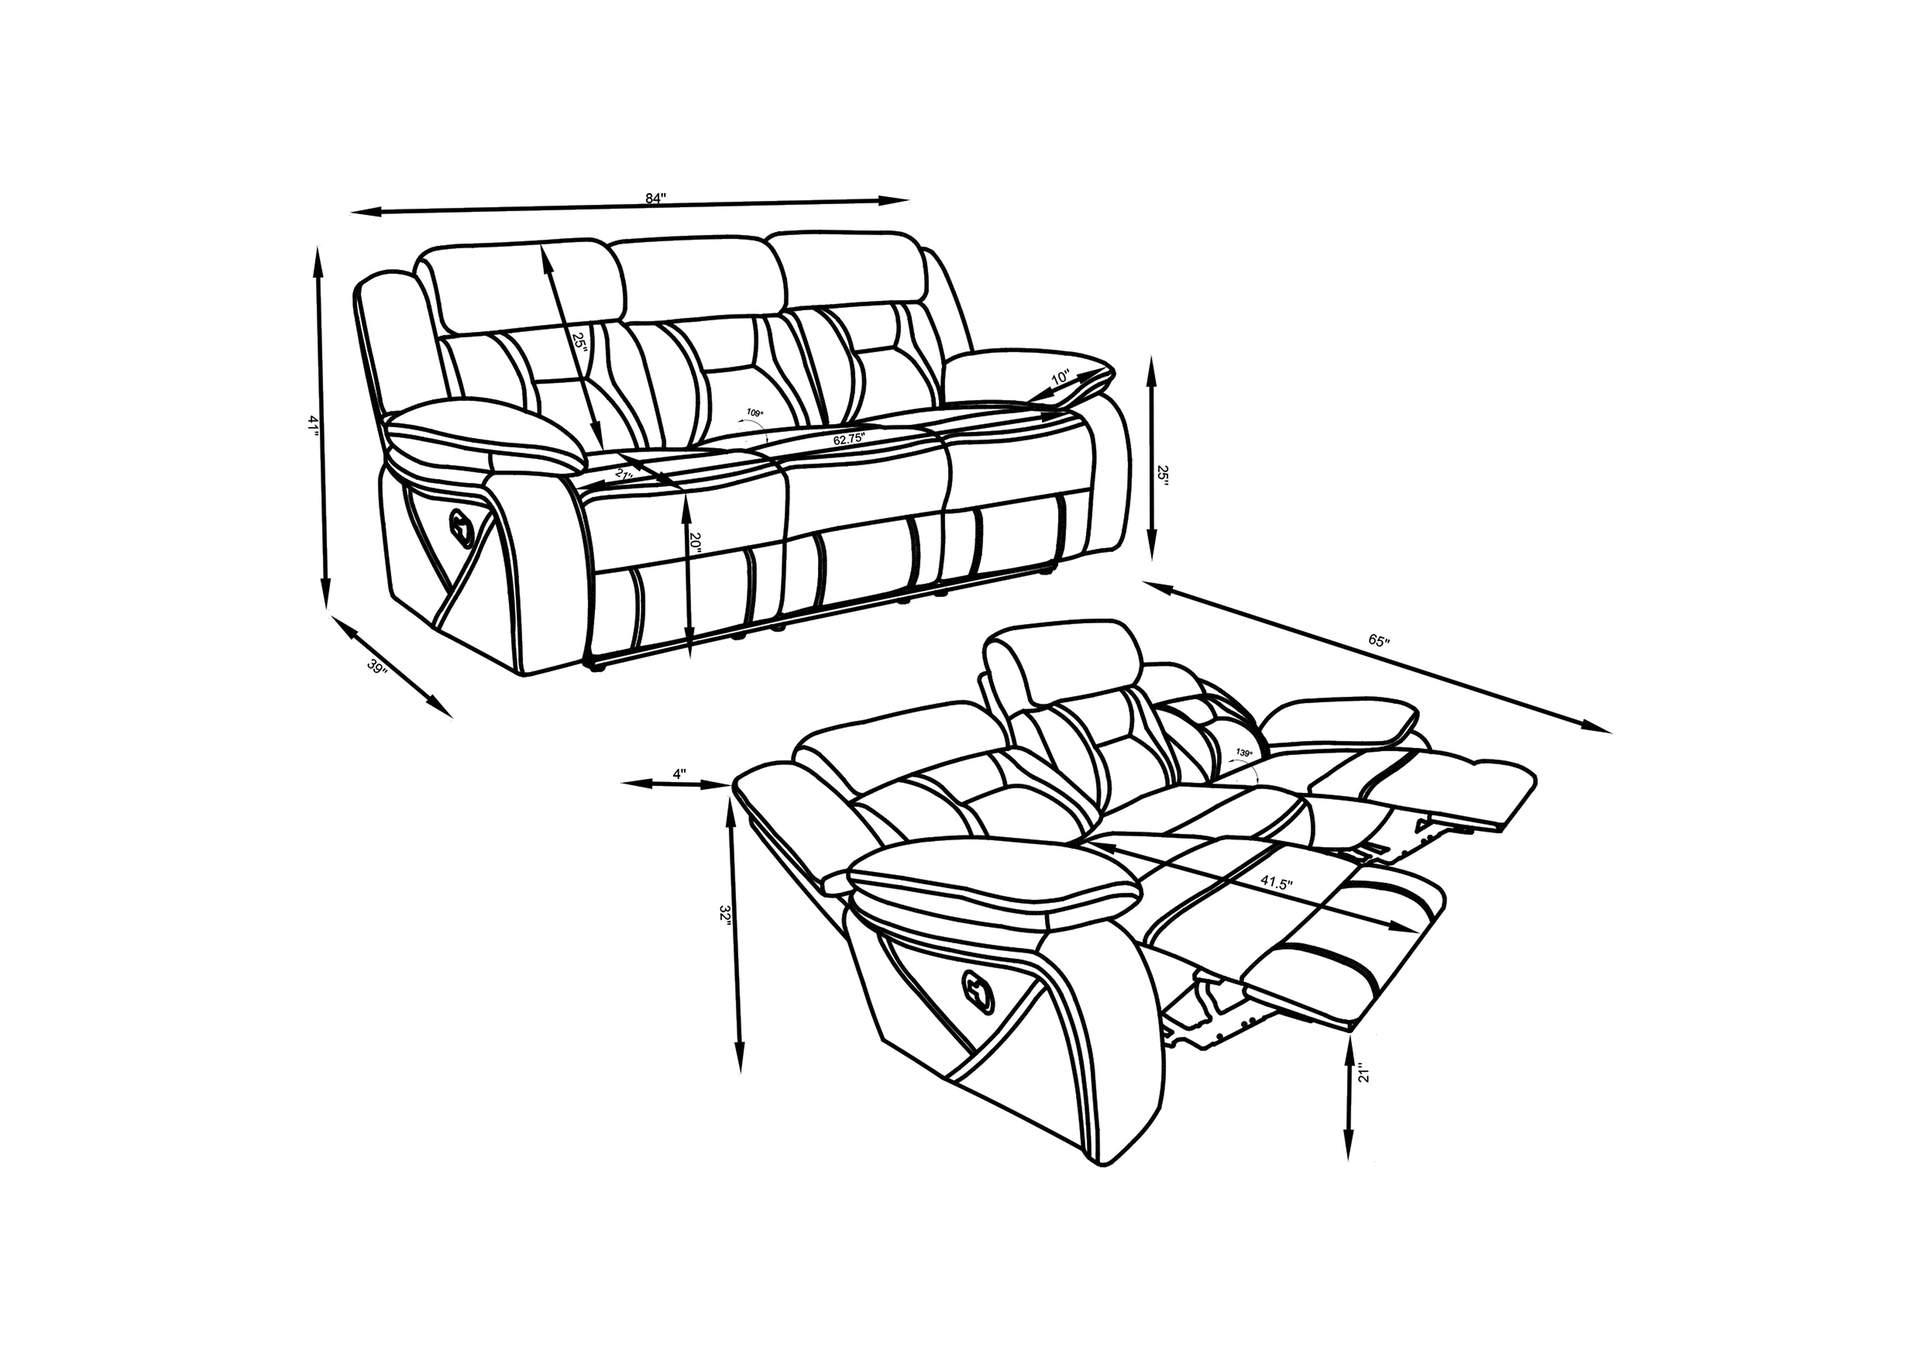 Higgins Pillow Top Arm Upholstered Motion Sofa Grey,Coaster Furniture